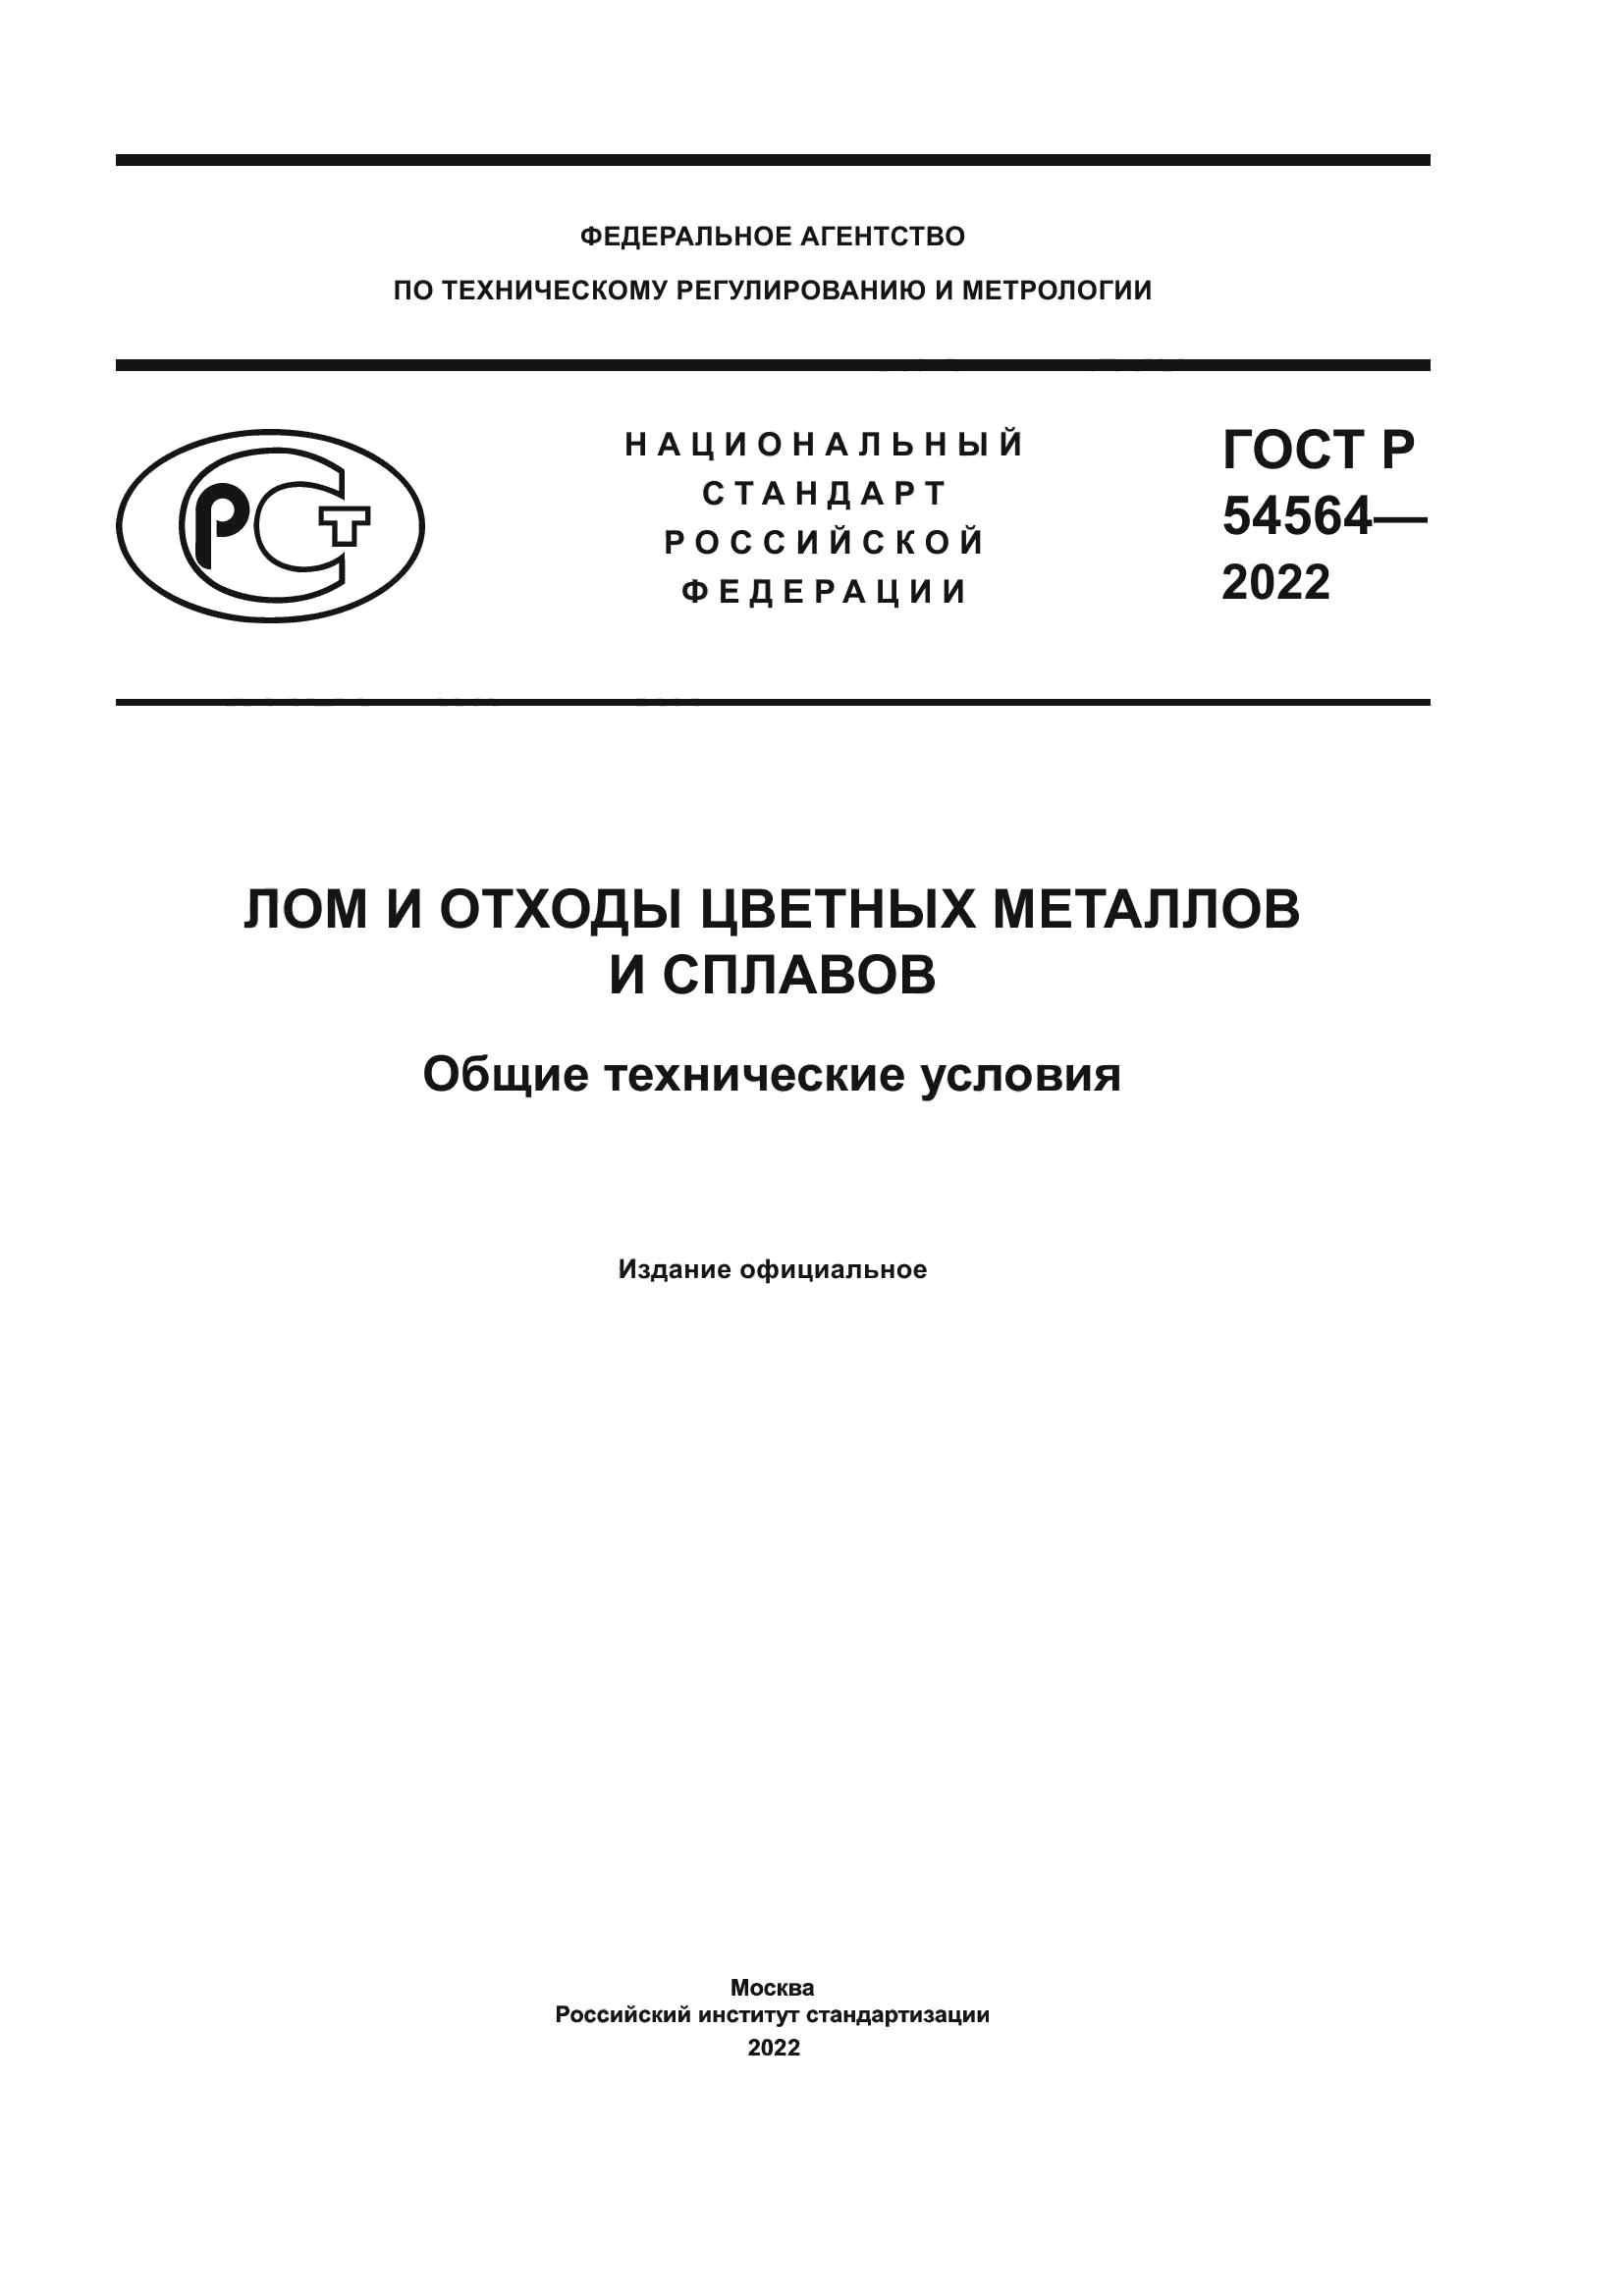 ГОСТ Р 54564-2022